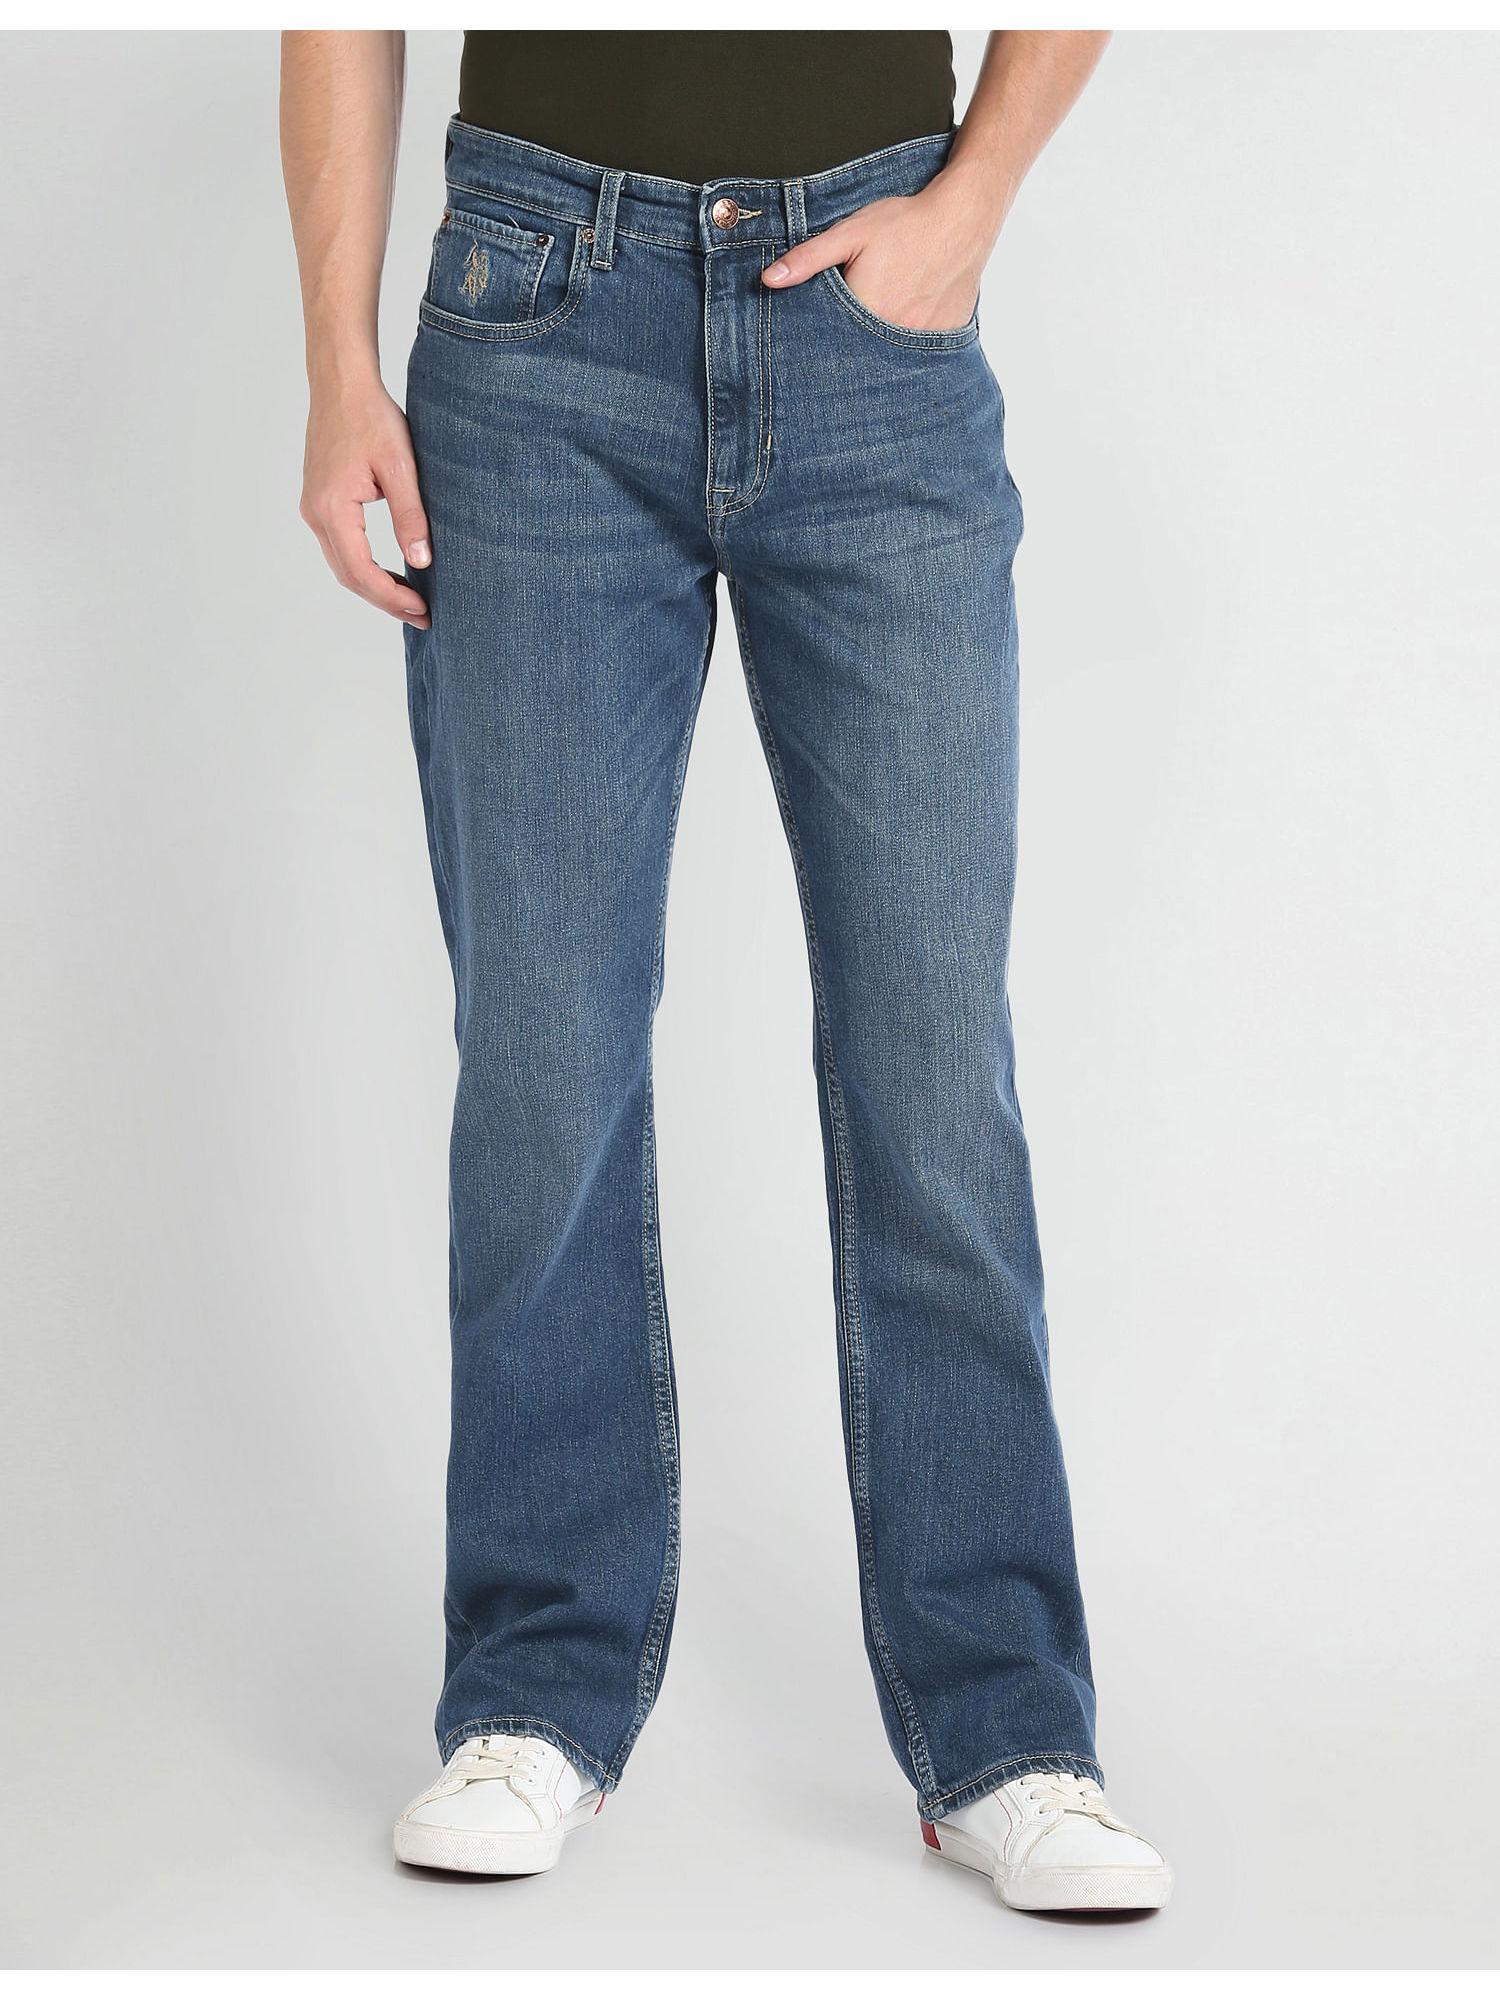 connor boot cut fit blue jeans